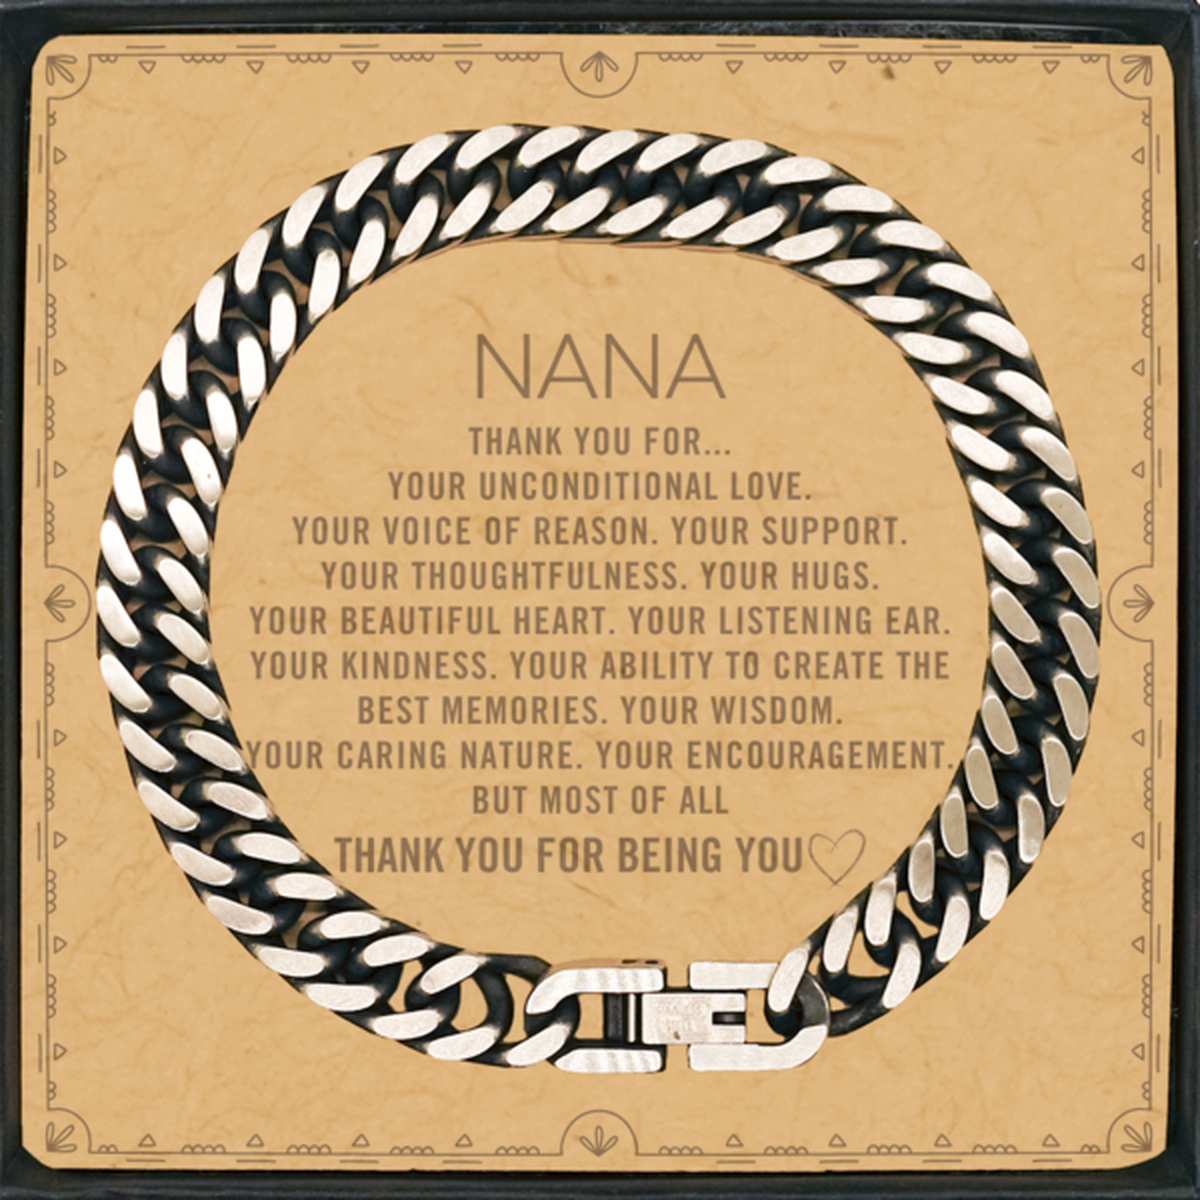 Nana Cuban Link Chain Bracelet Custom, Message Card Gifts For Nana Christmas Graduation Birthday Gifts for Men Women Nana Thank you for Your unconditional love